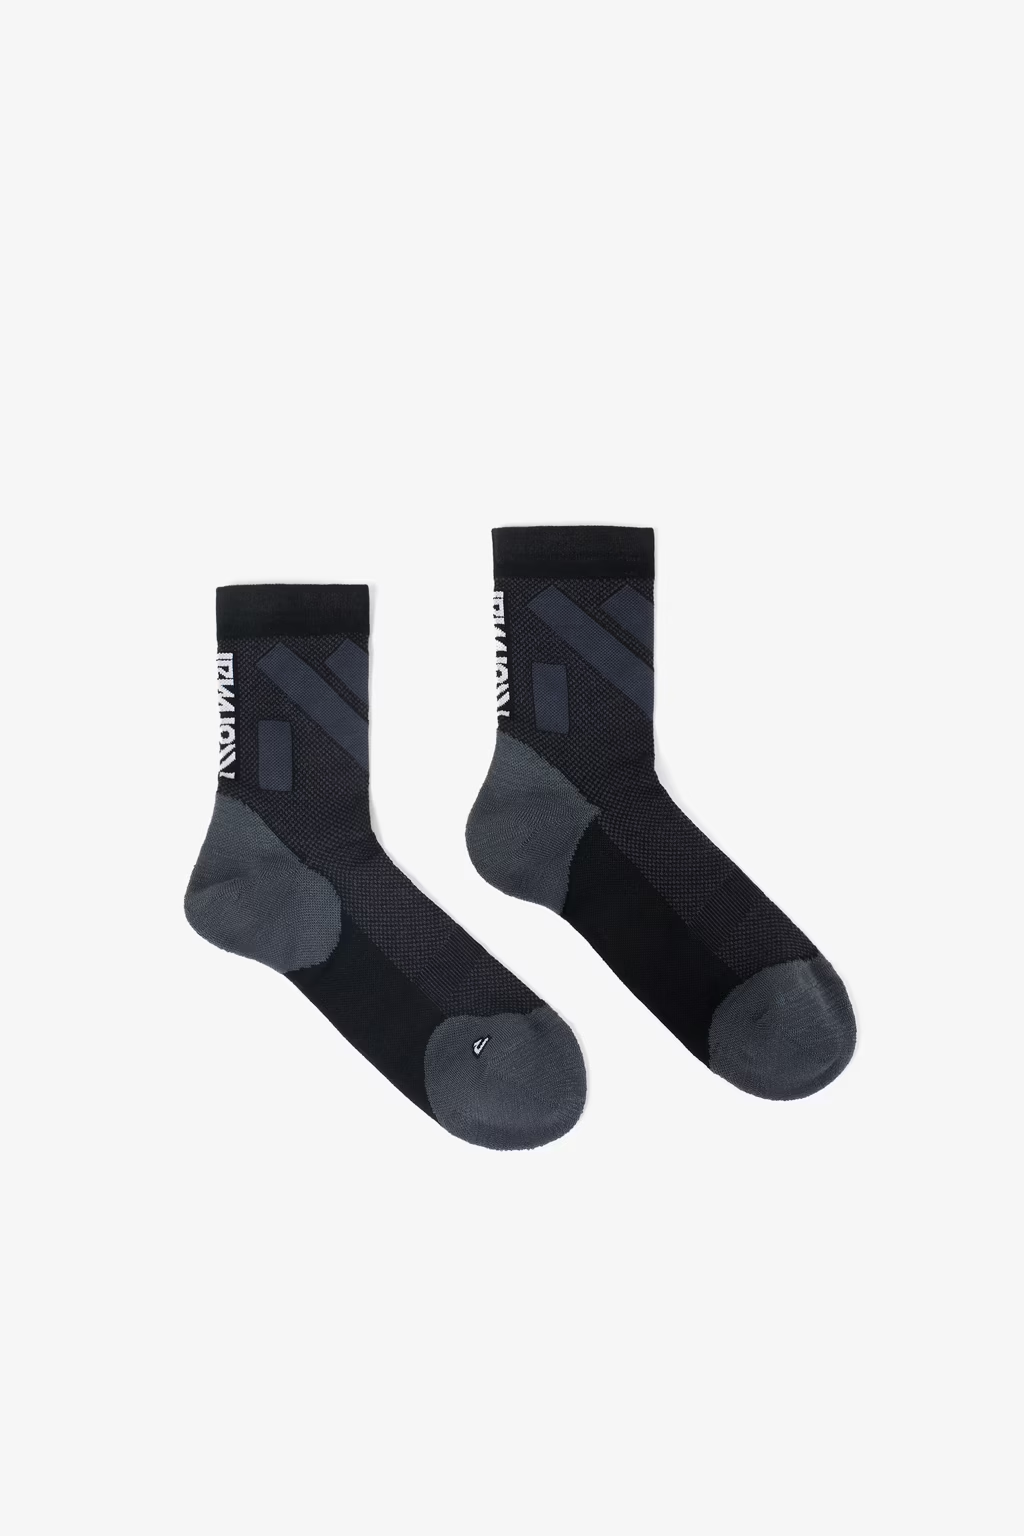 NNormal Race Socks (Low-Cut)